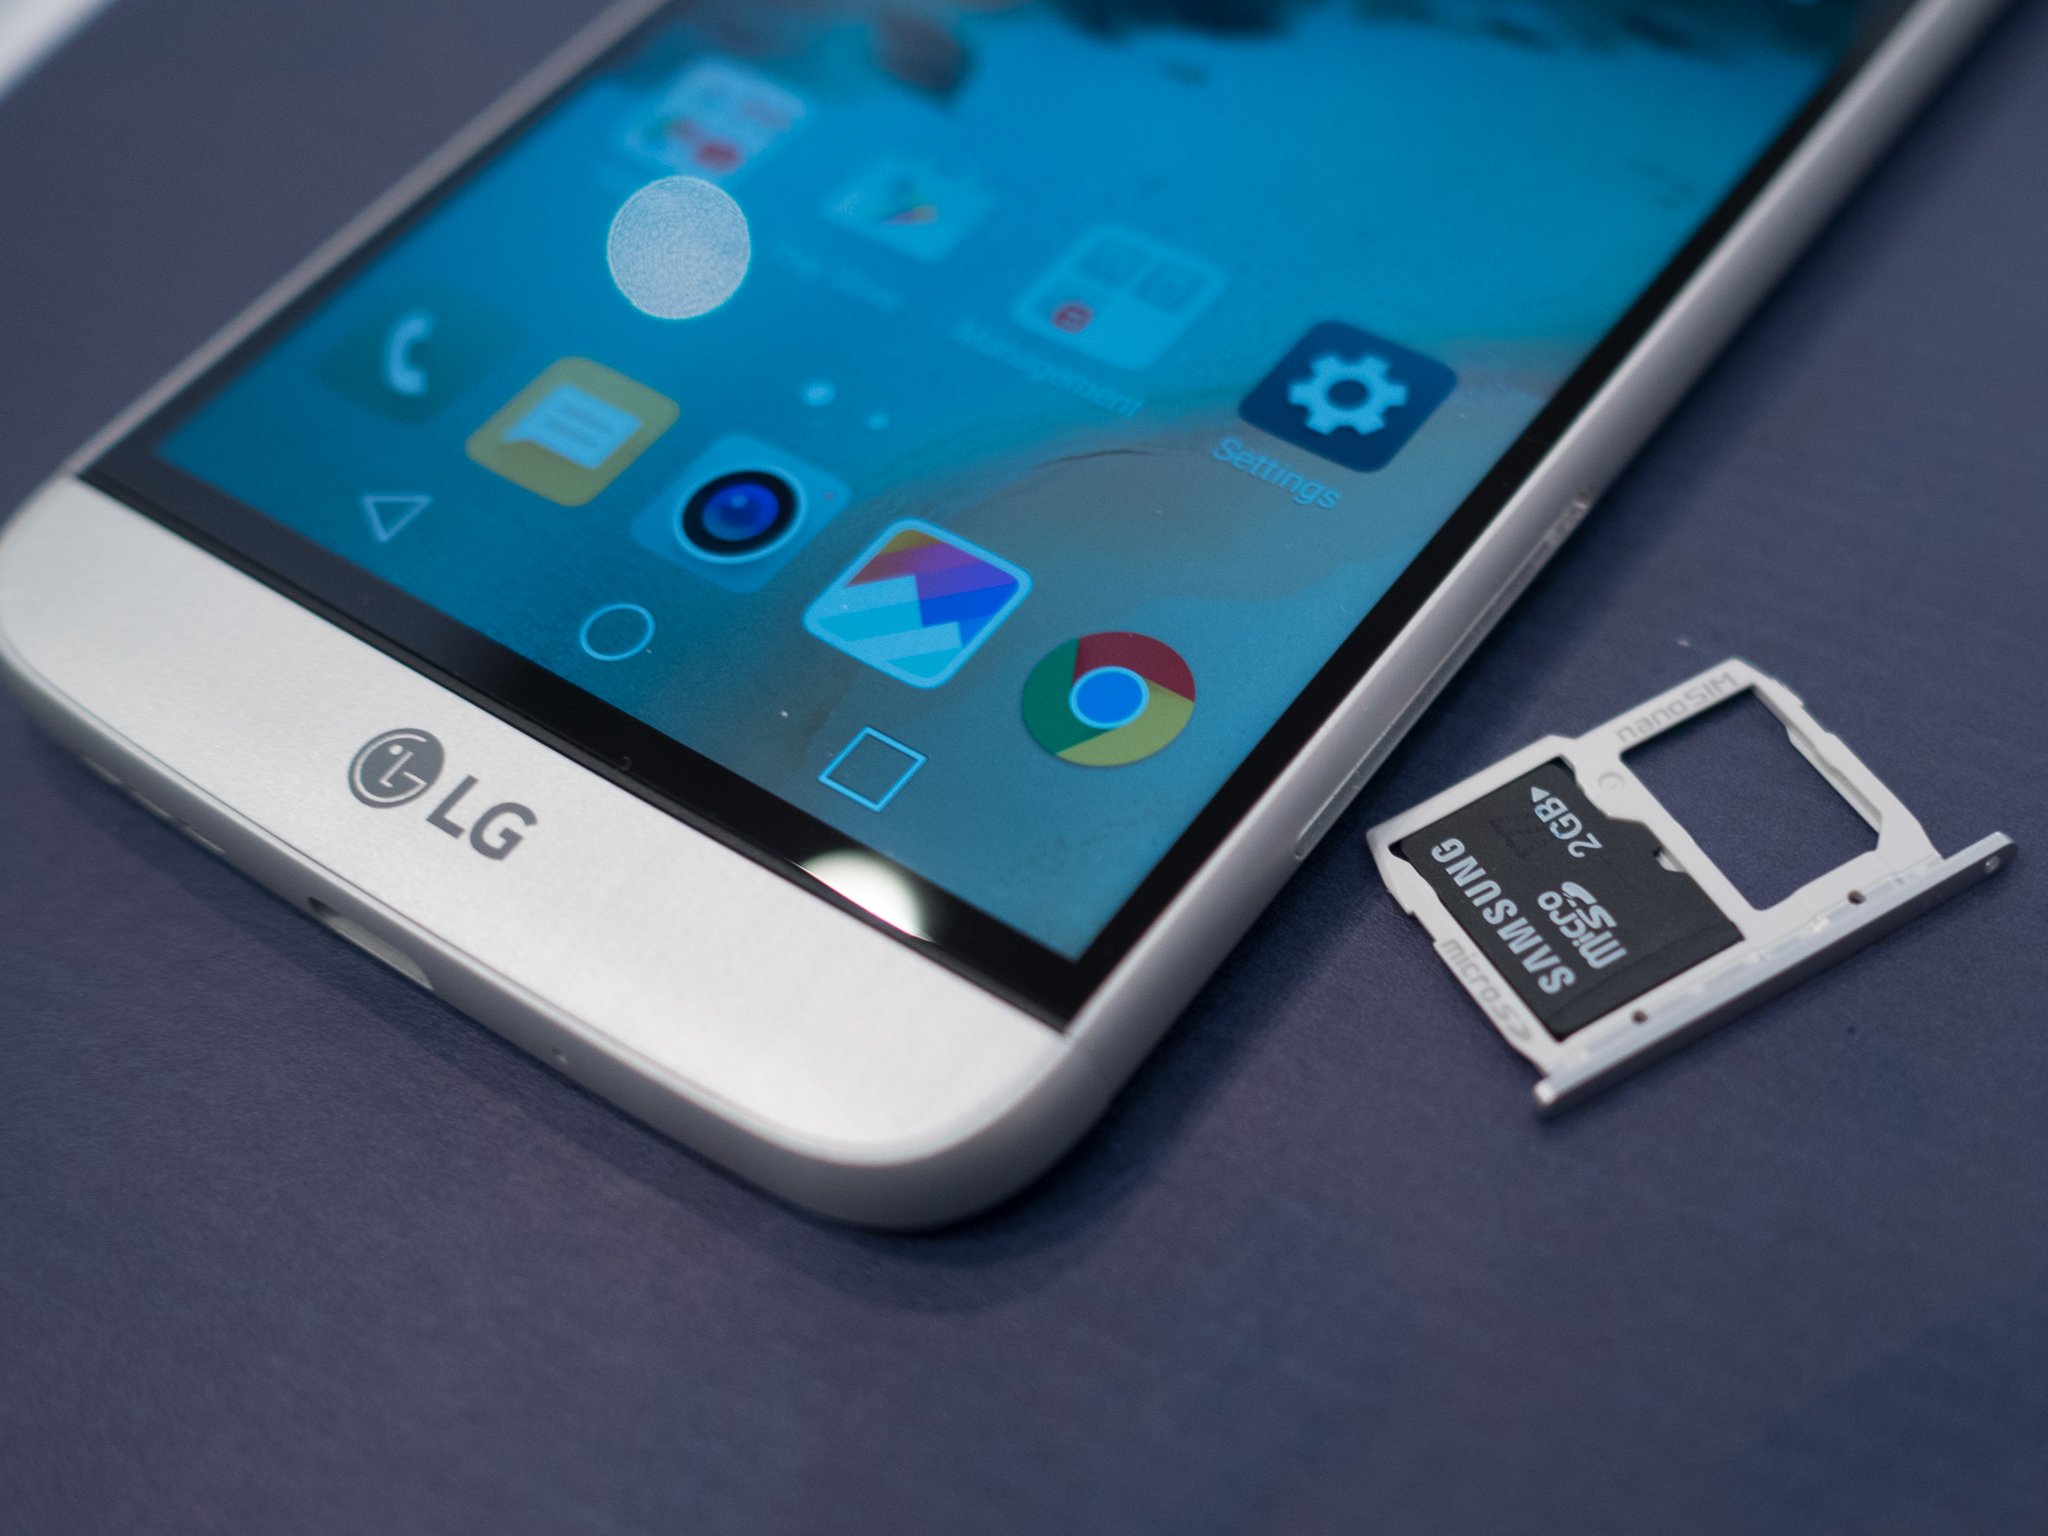 LG G5 SD card